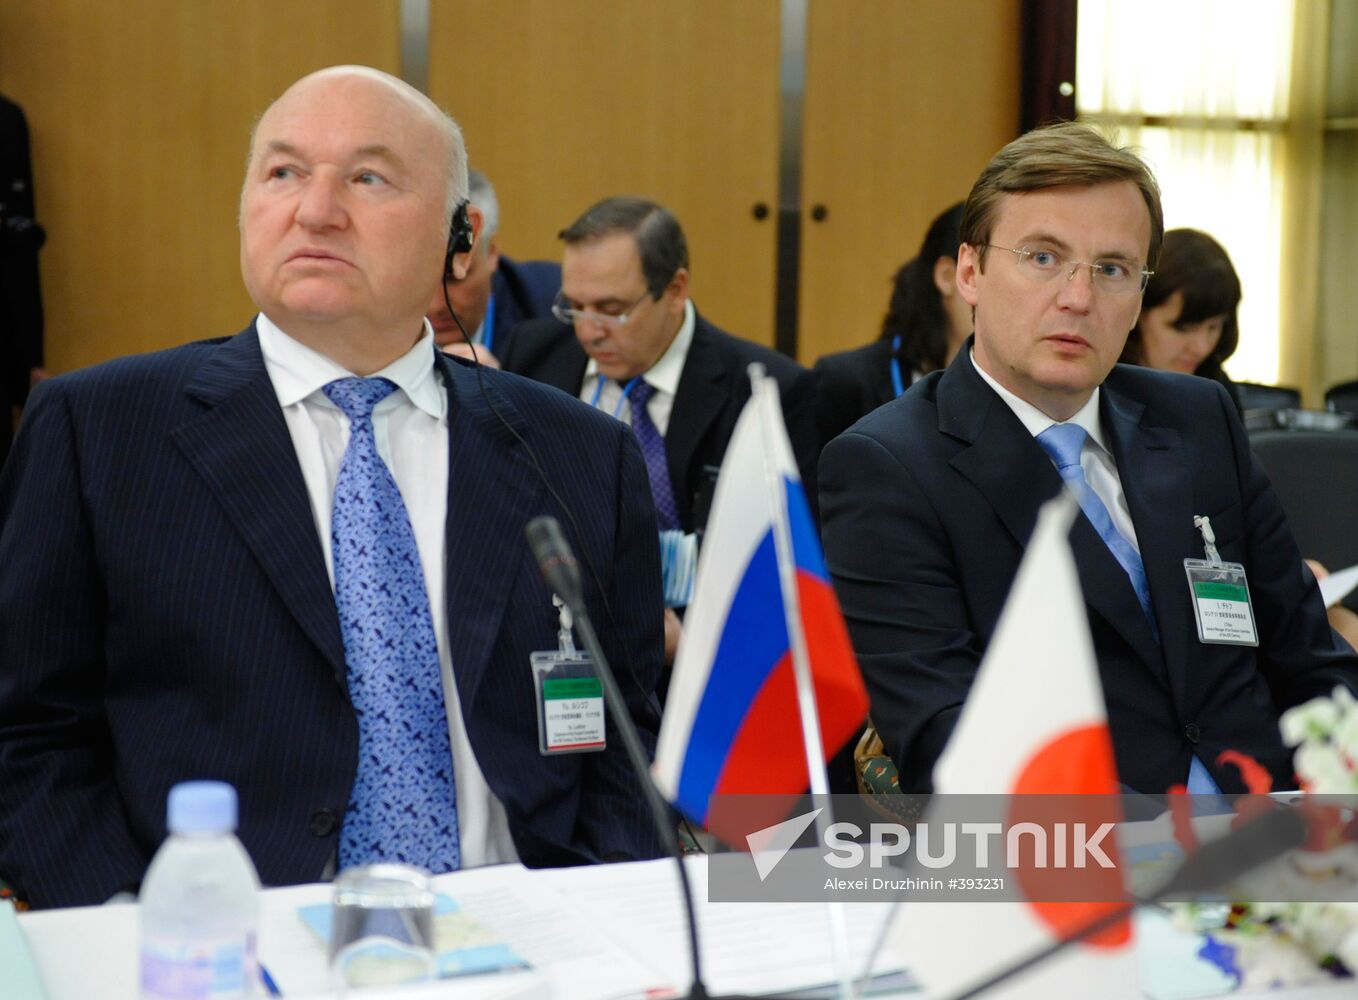 Moscow Mayor Yuri Luzhkov